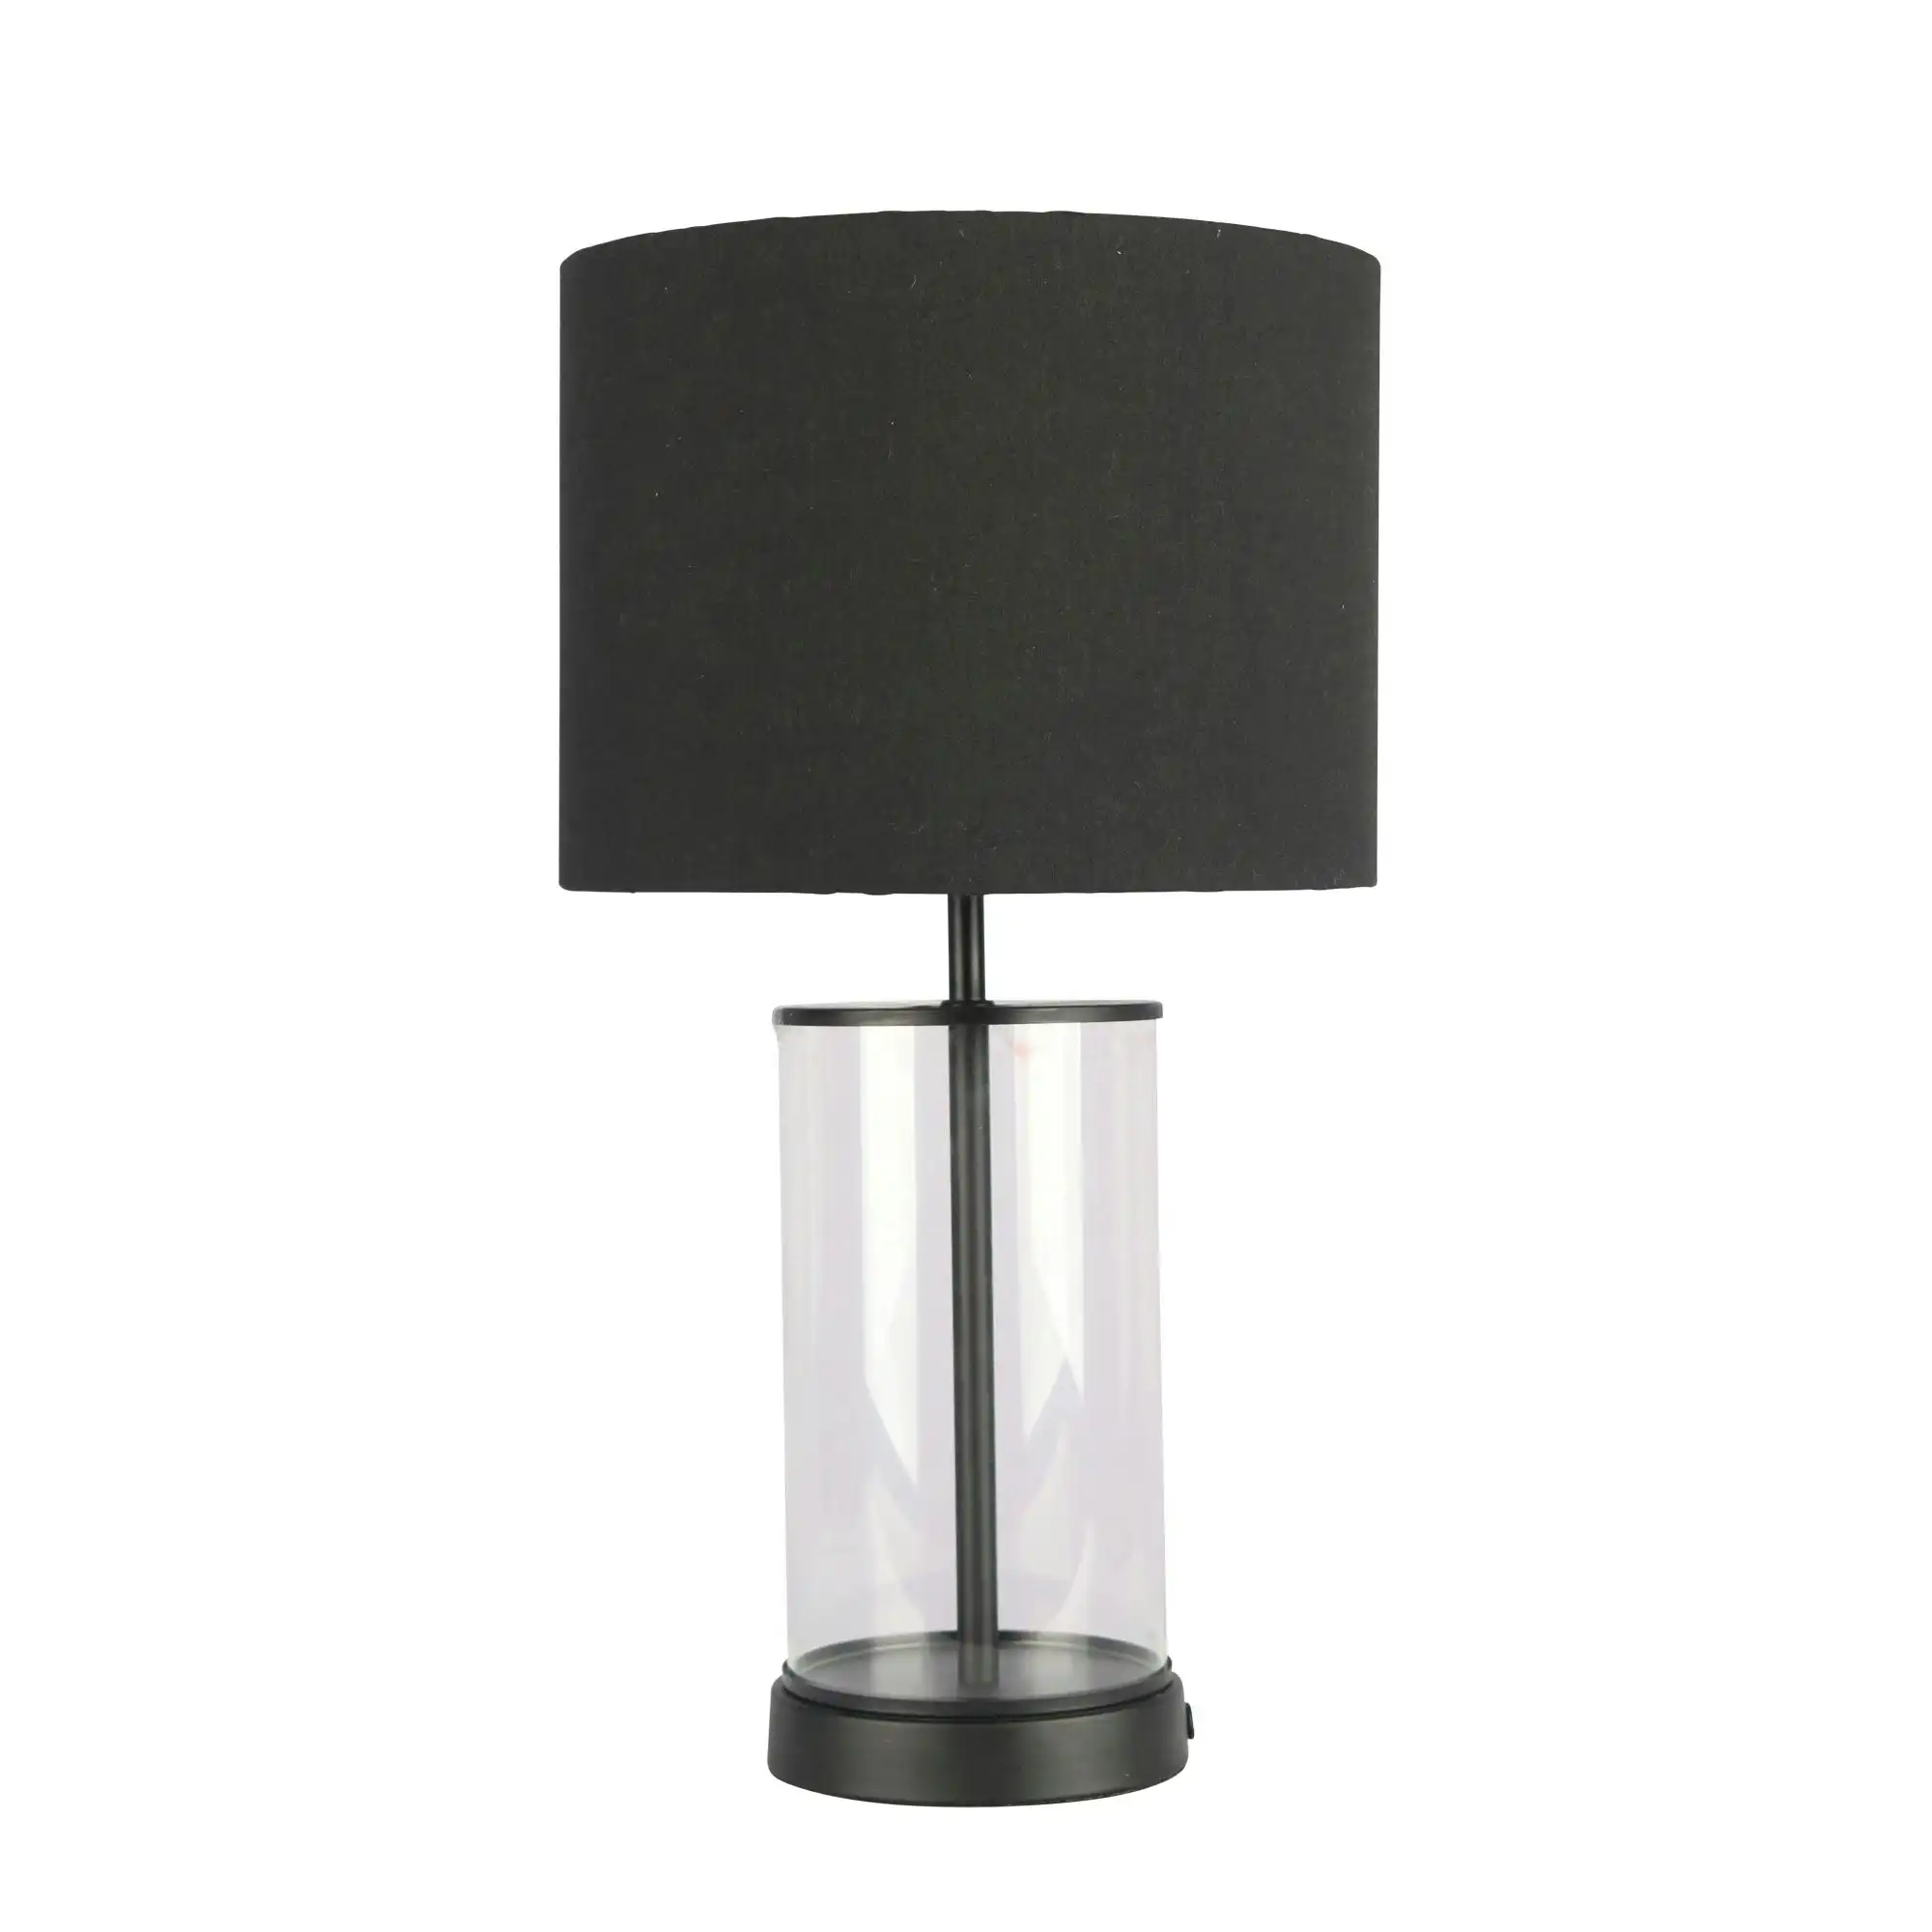 BRITT Complete Glass Table Lamp